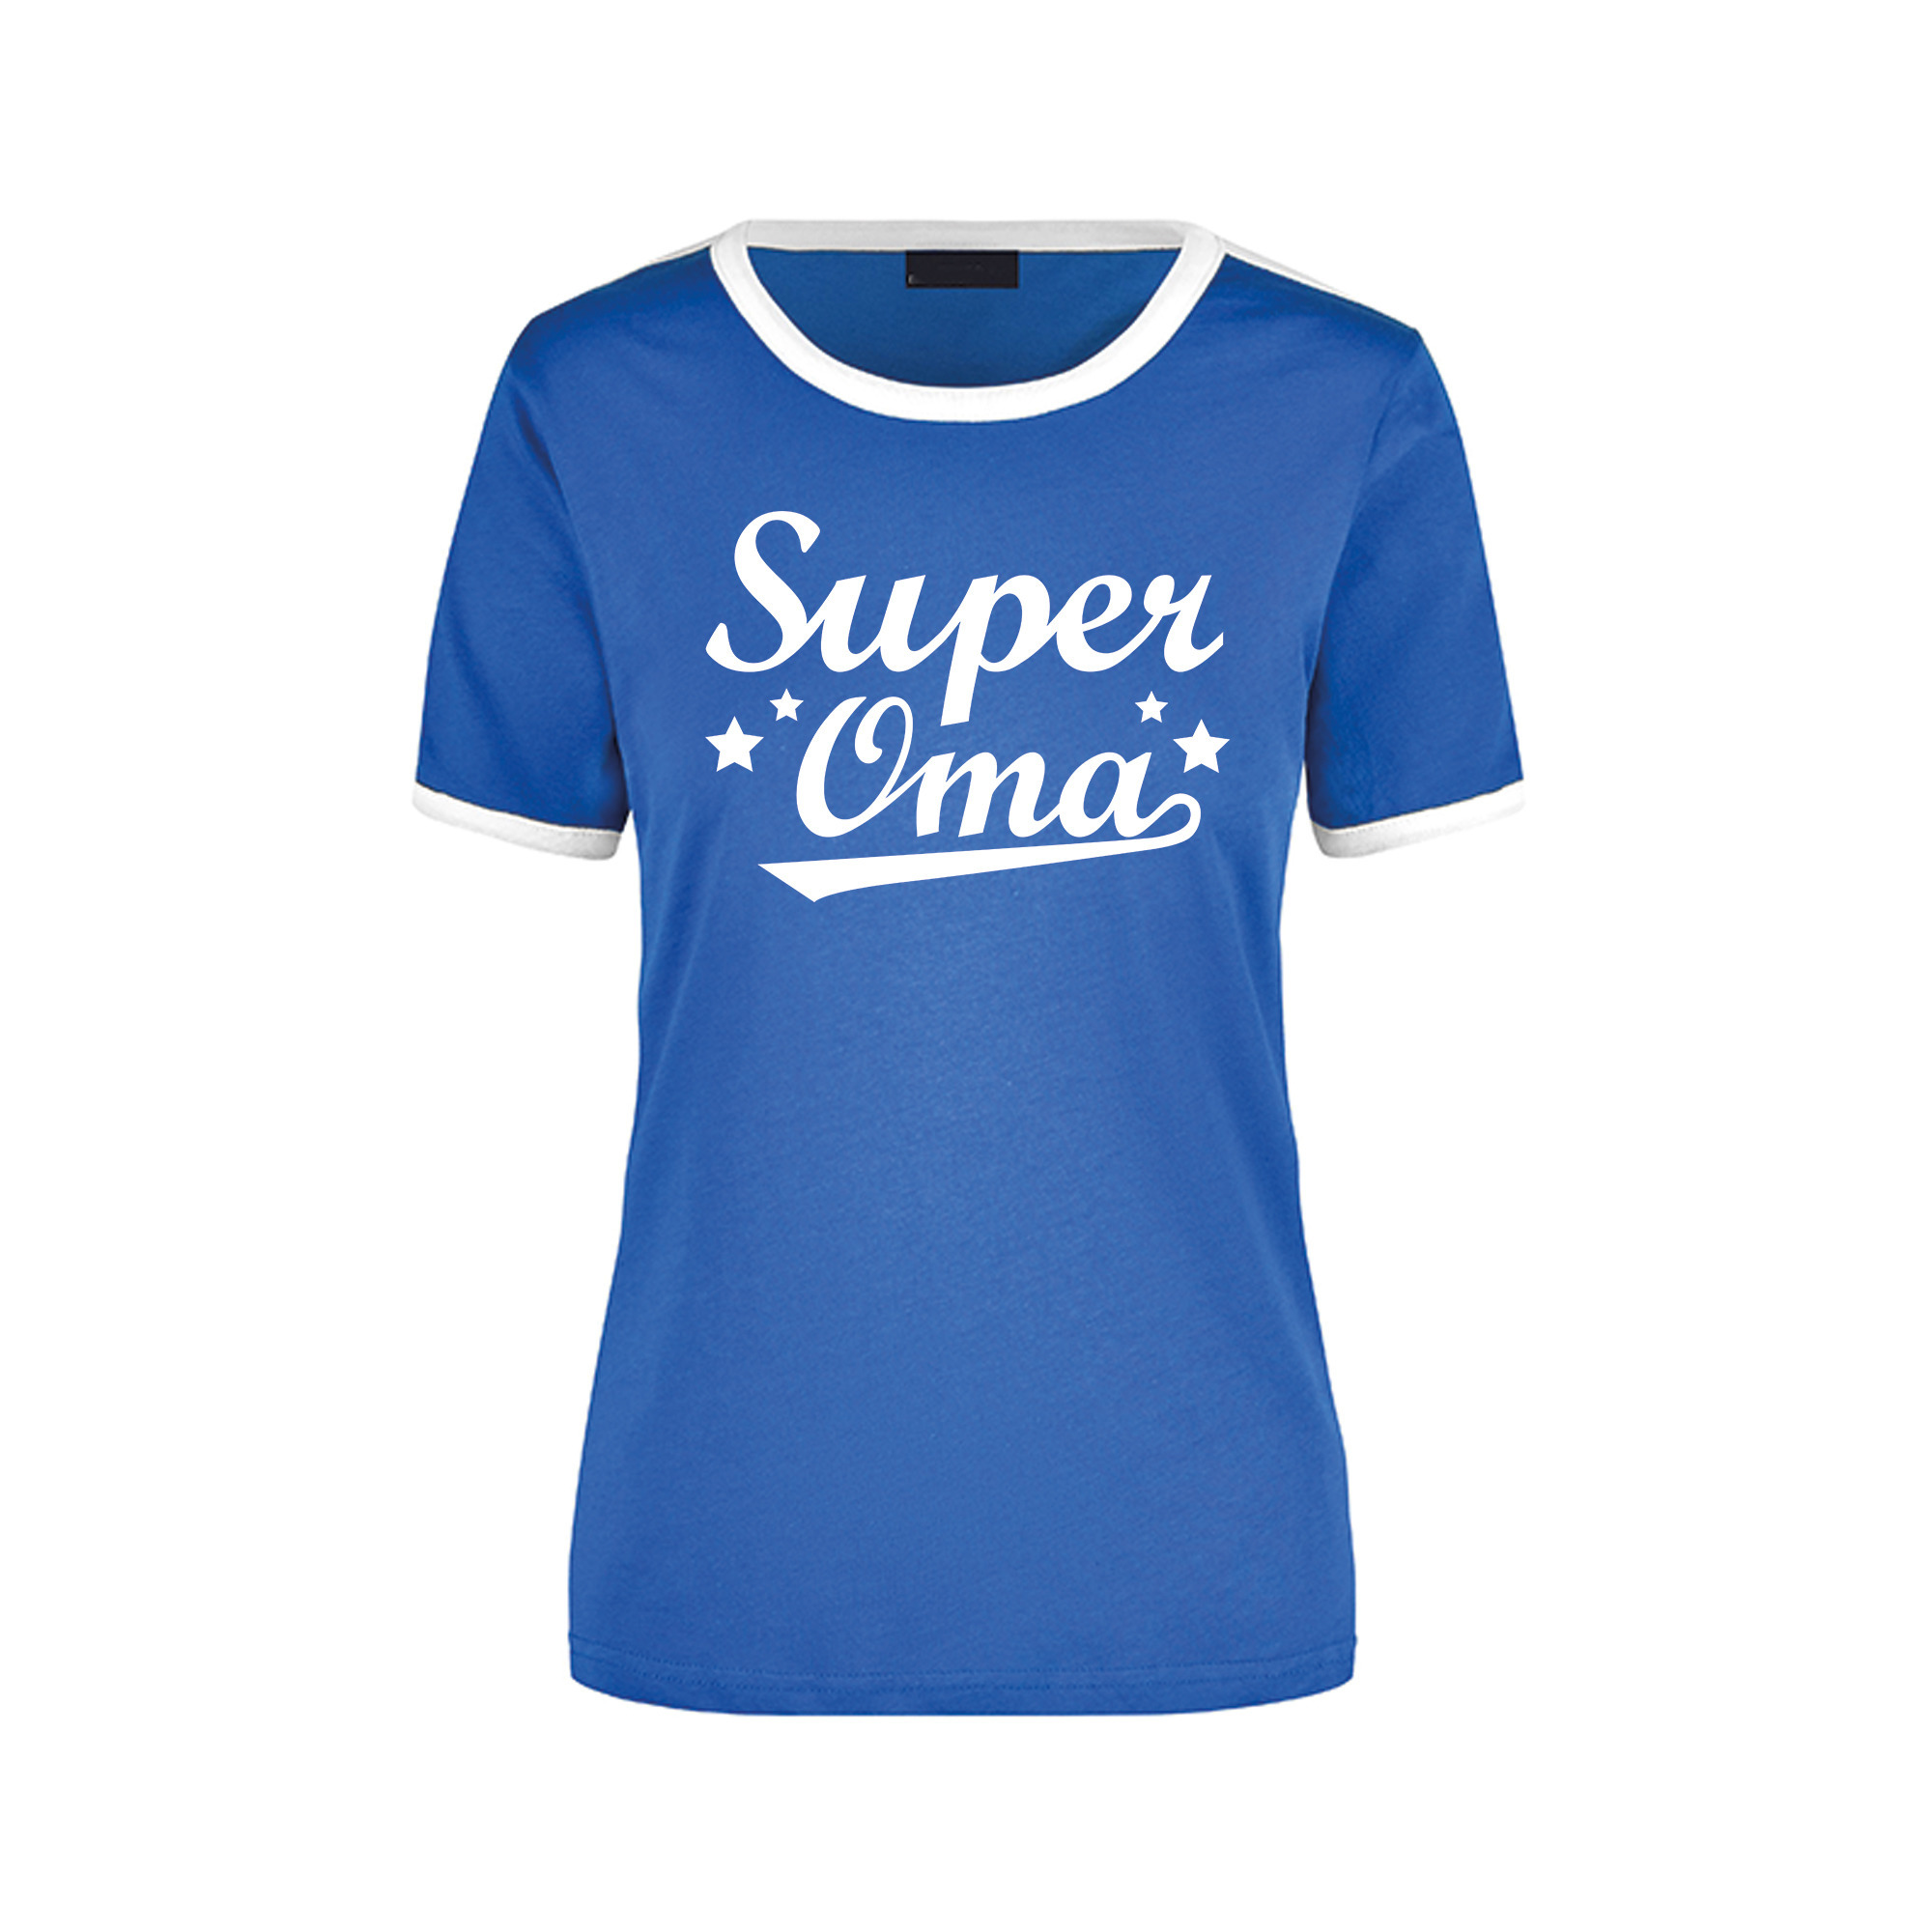 Super oma blauw/wit ringer t-shirt voor dames